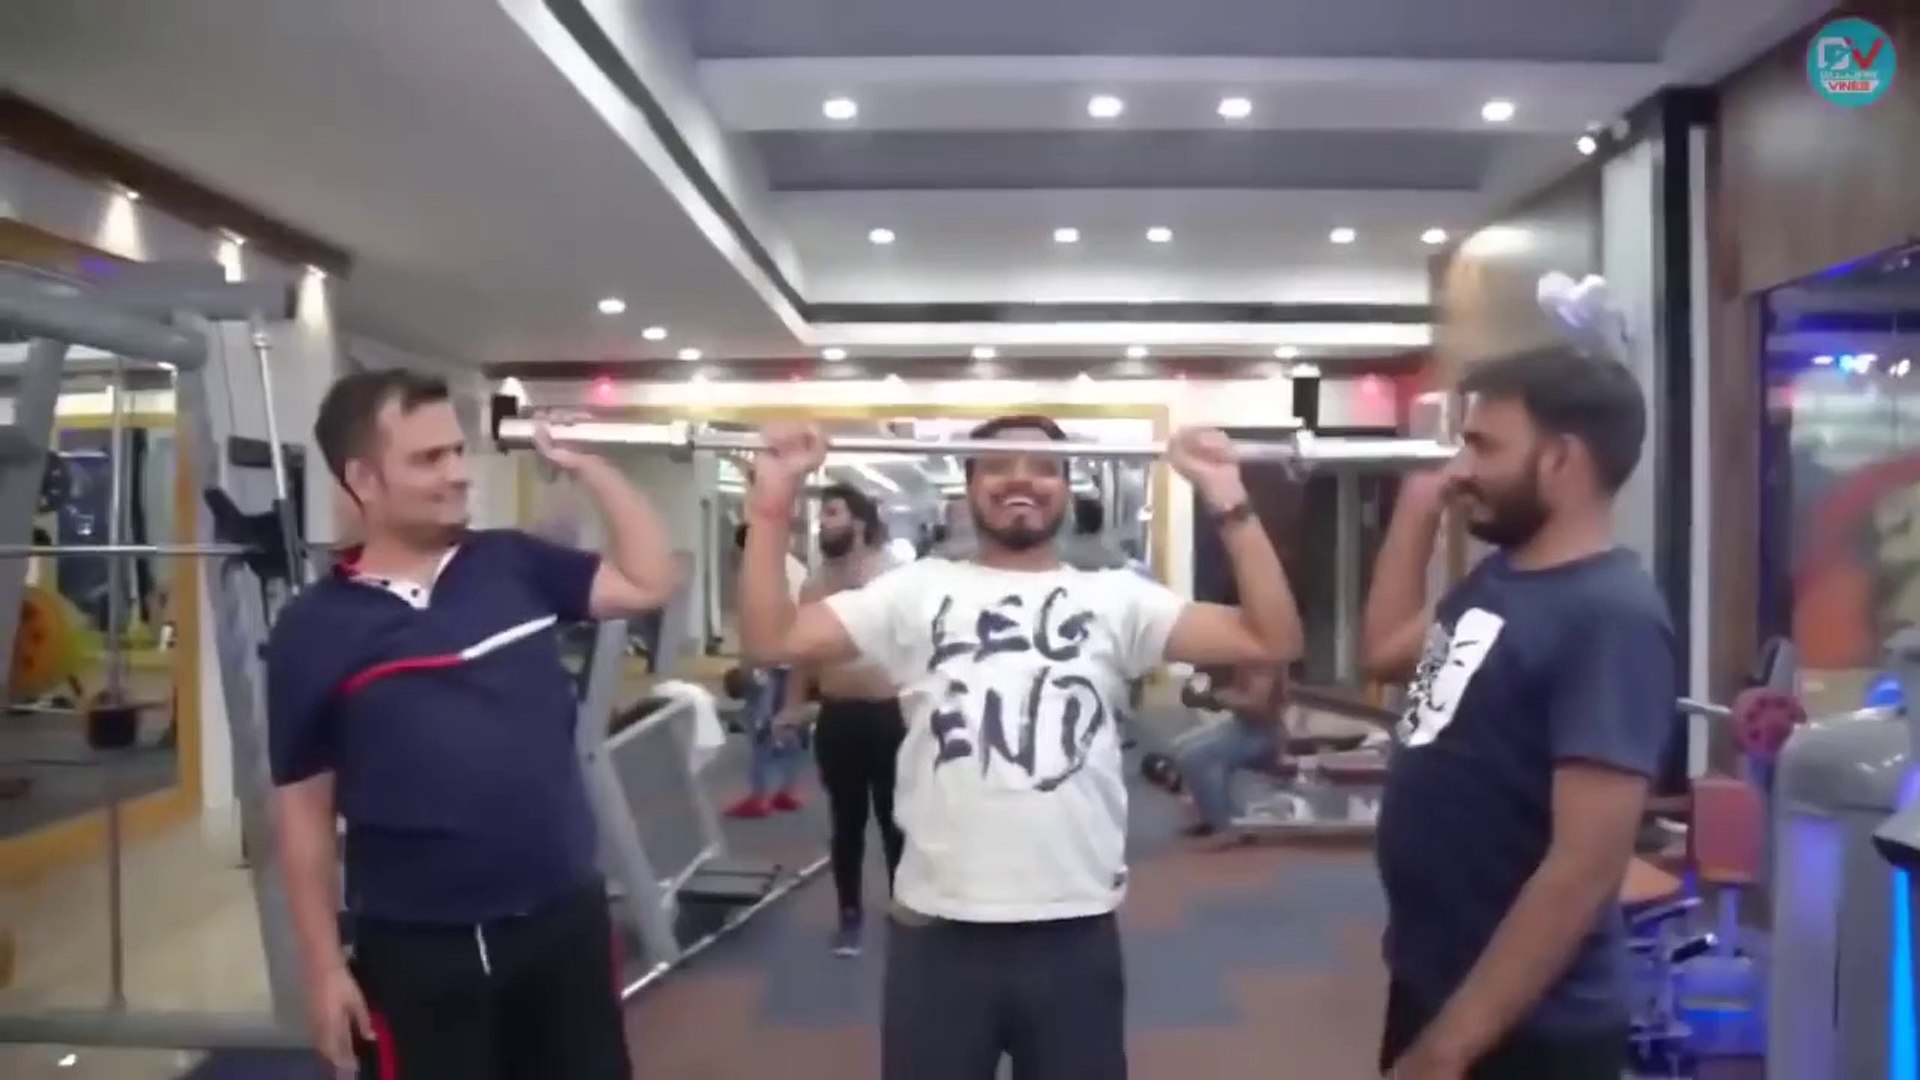 Amit bhadana new comedy video 2019,gym video, Amit badana comedy gym video  - video Dailymotion